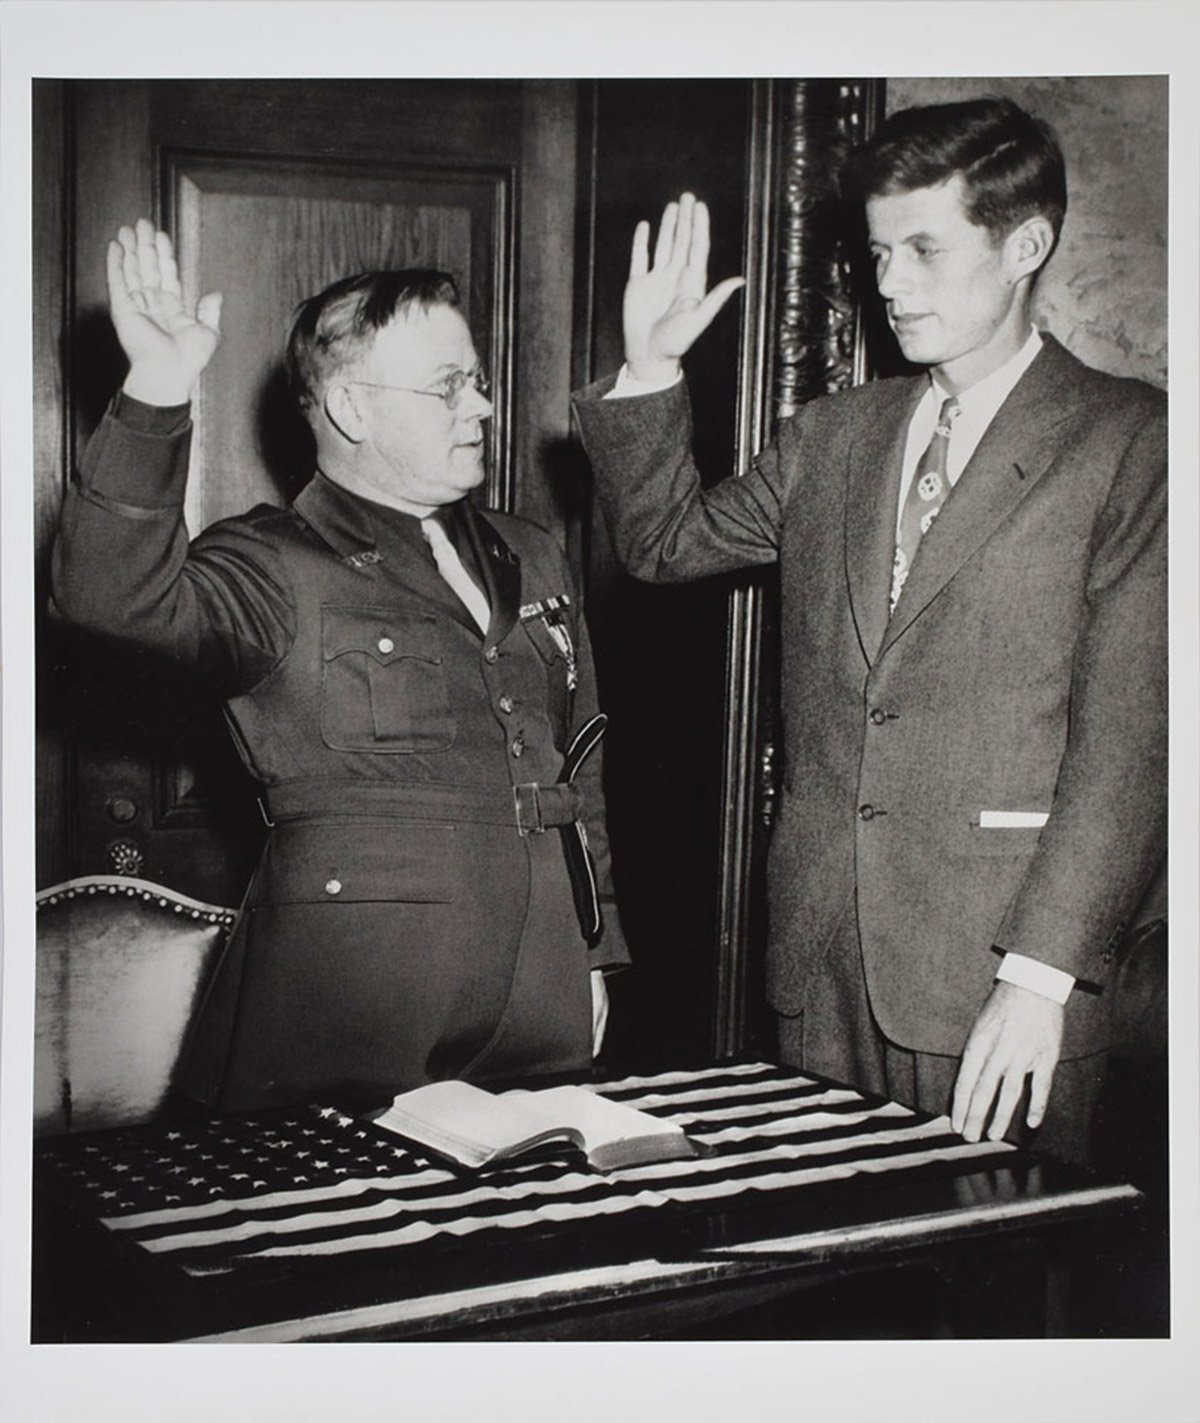 Rare photos of John F. Kennedy